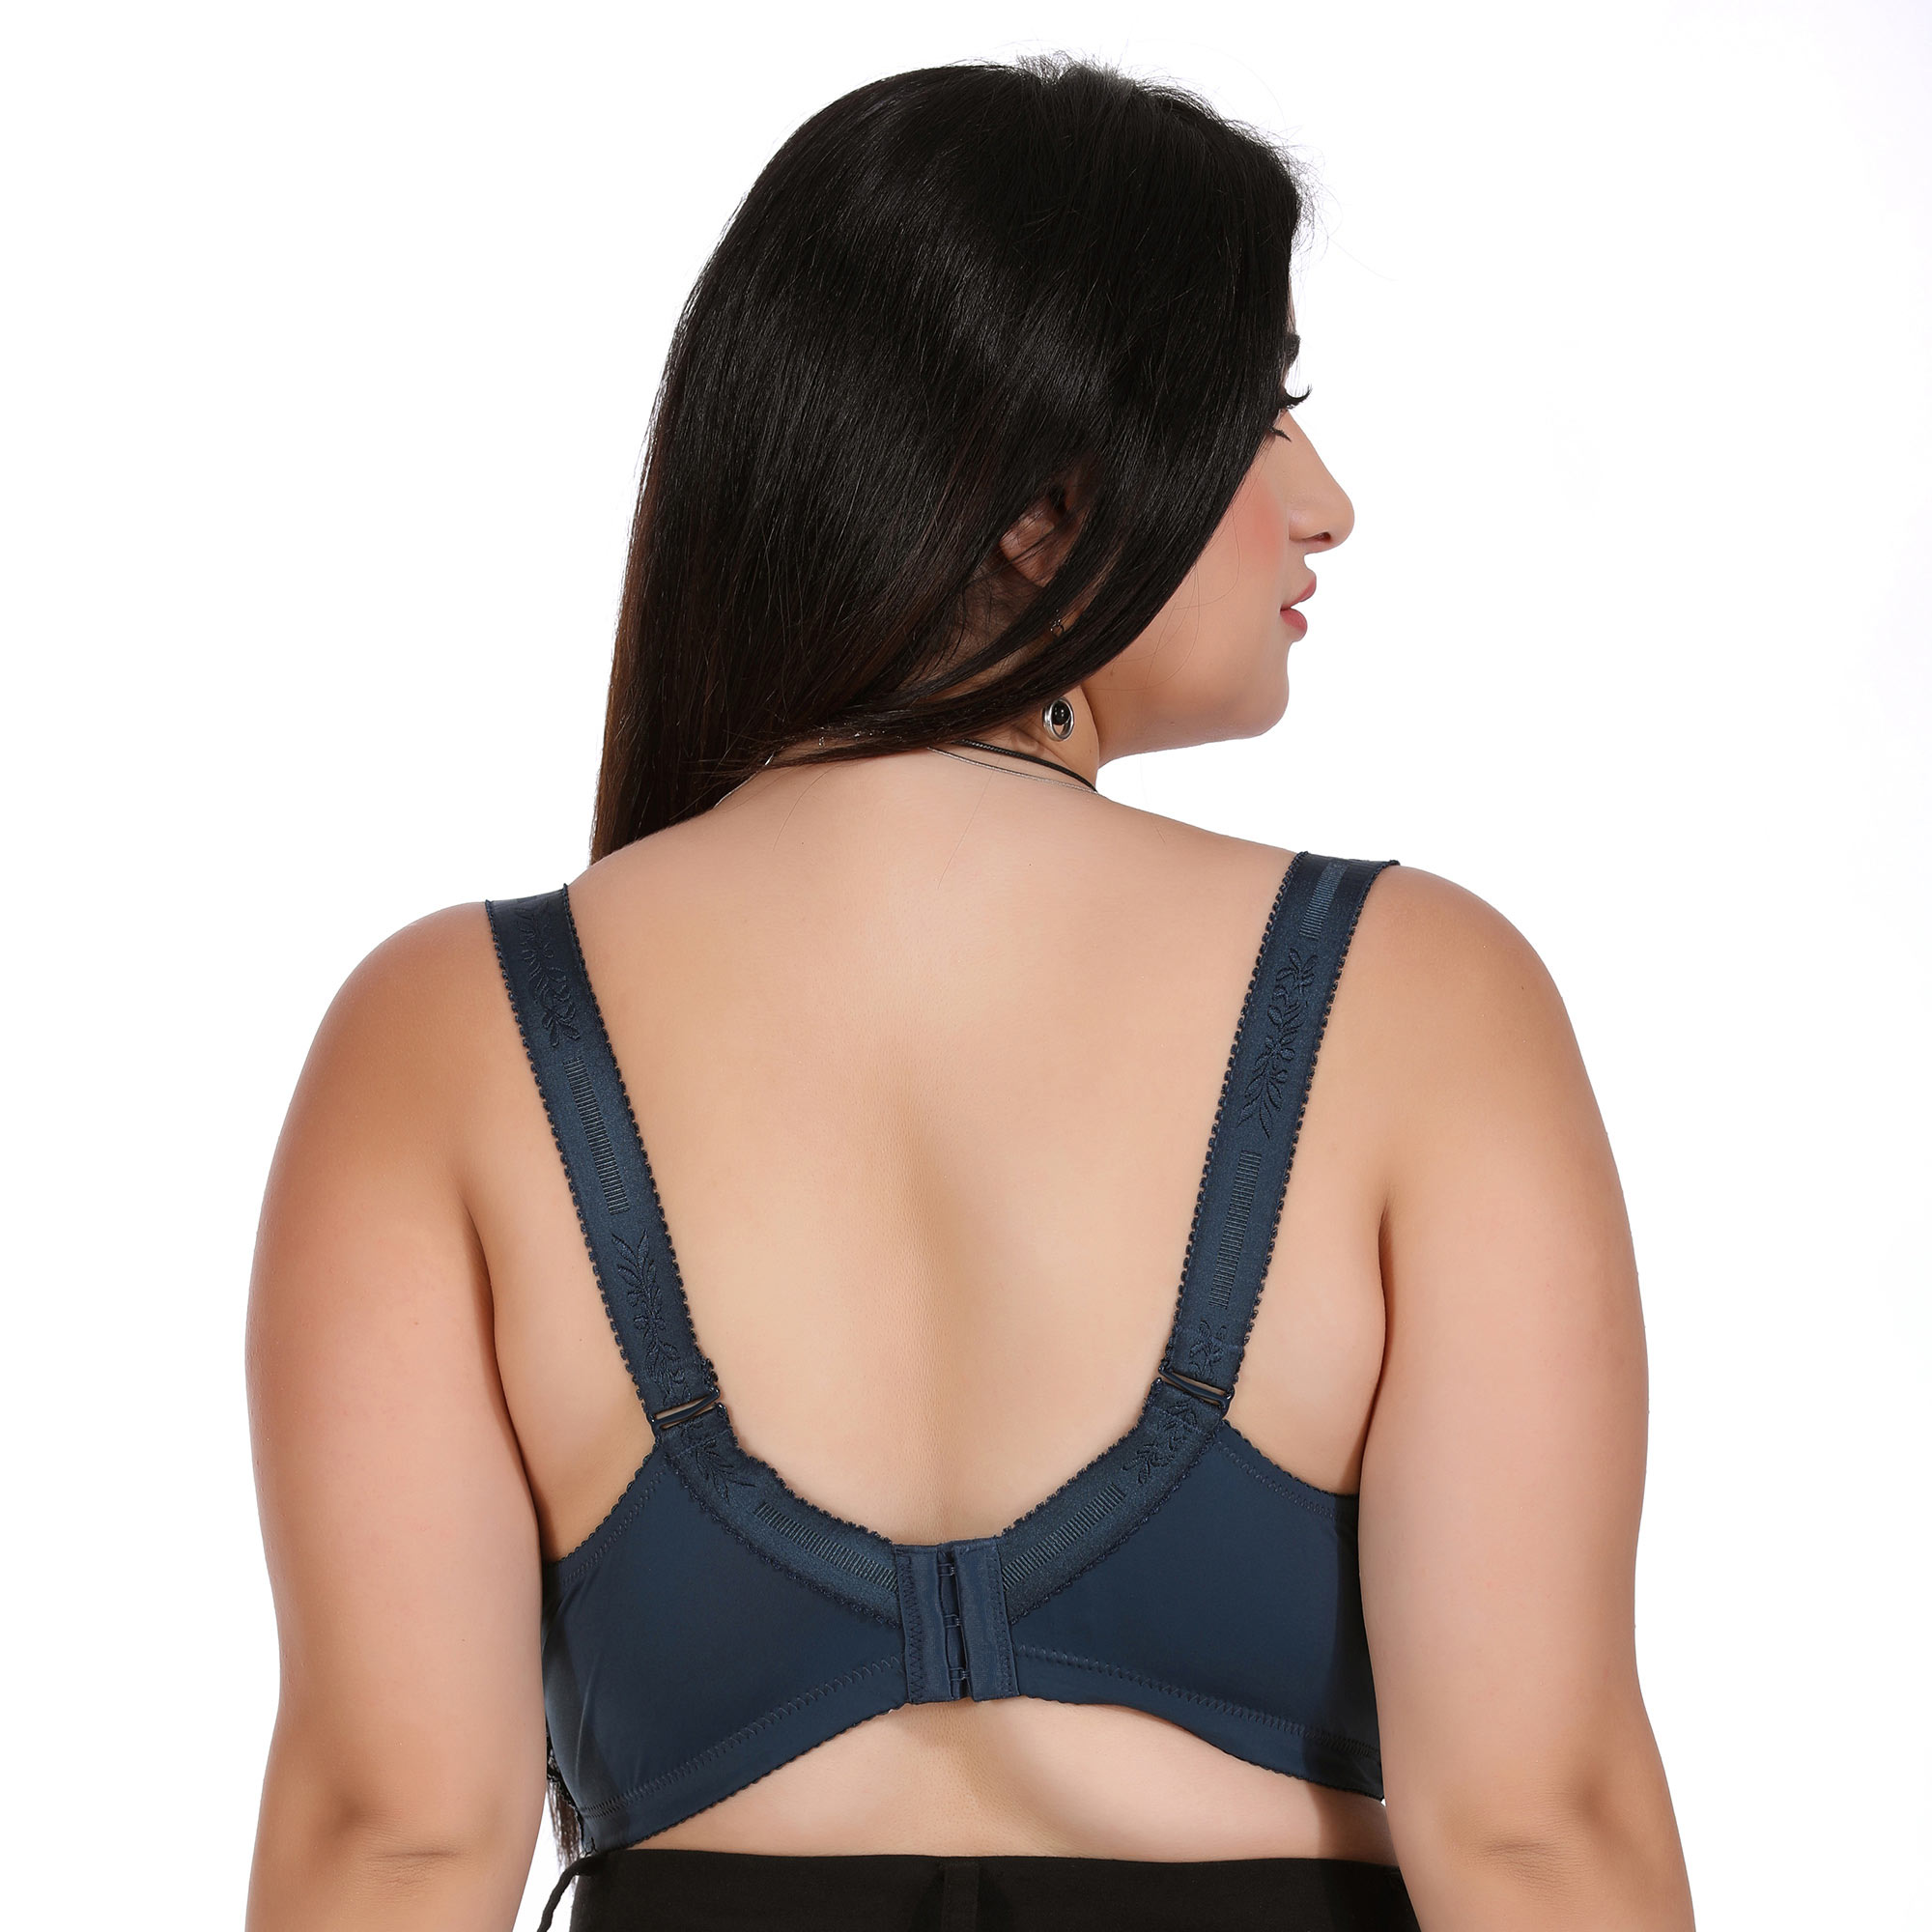 Wholesale bra size 42g For Supportive Underwear 